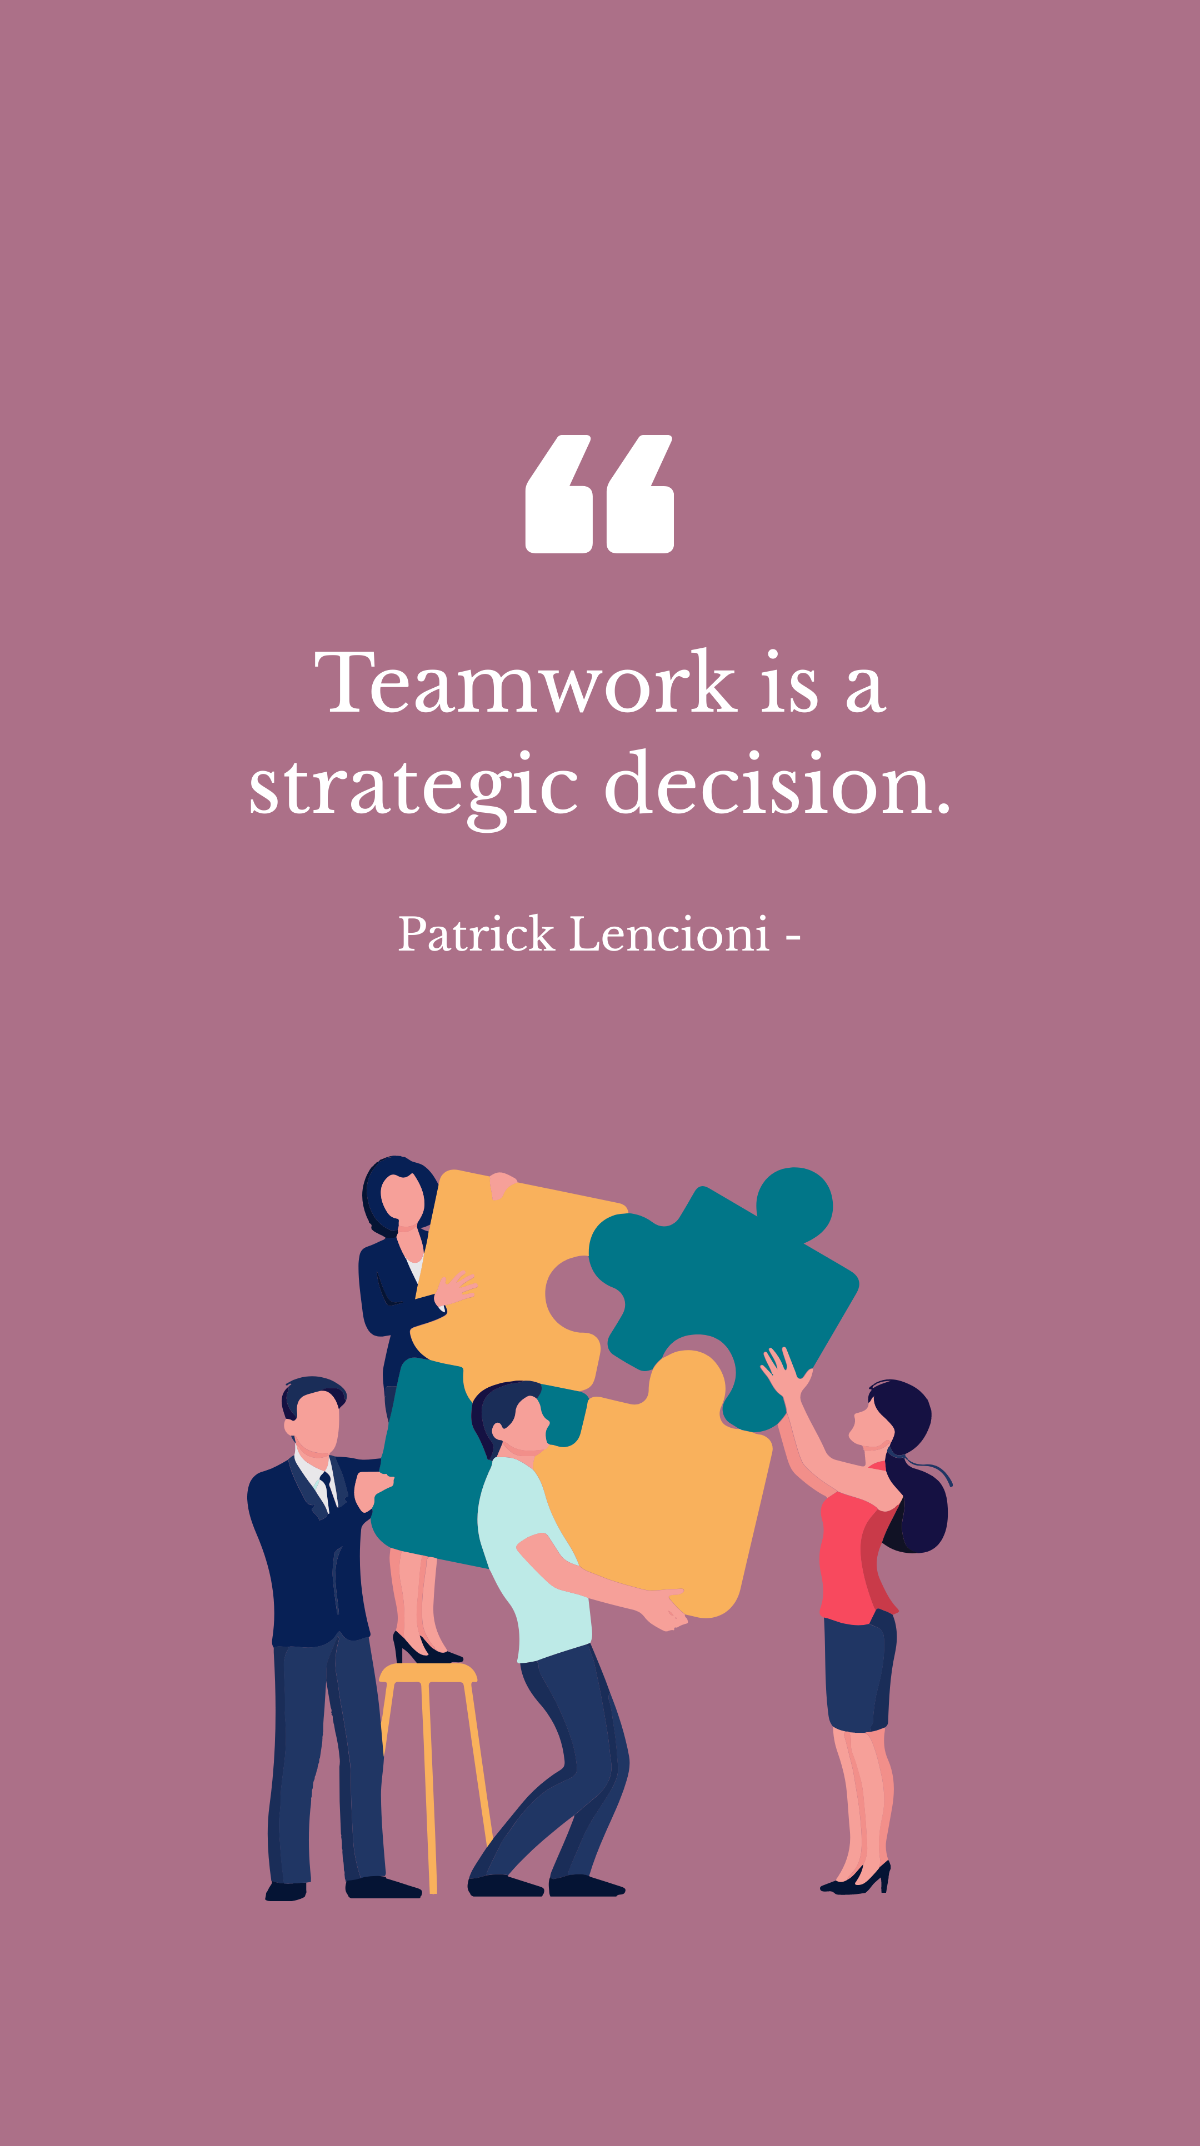 Patrick Lencioni - Teamwork is a strategic decision. Template